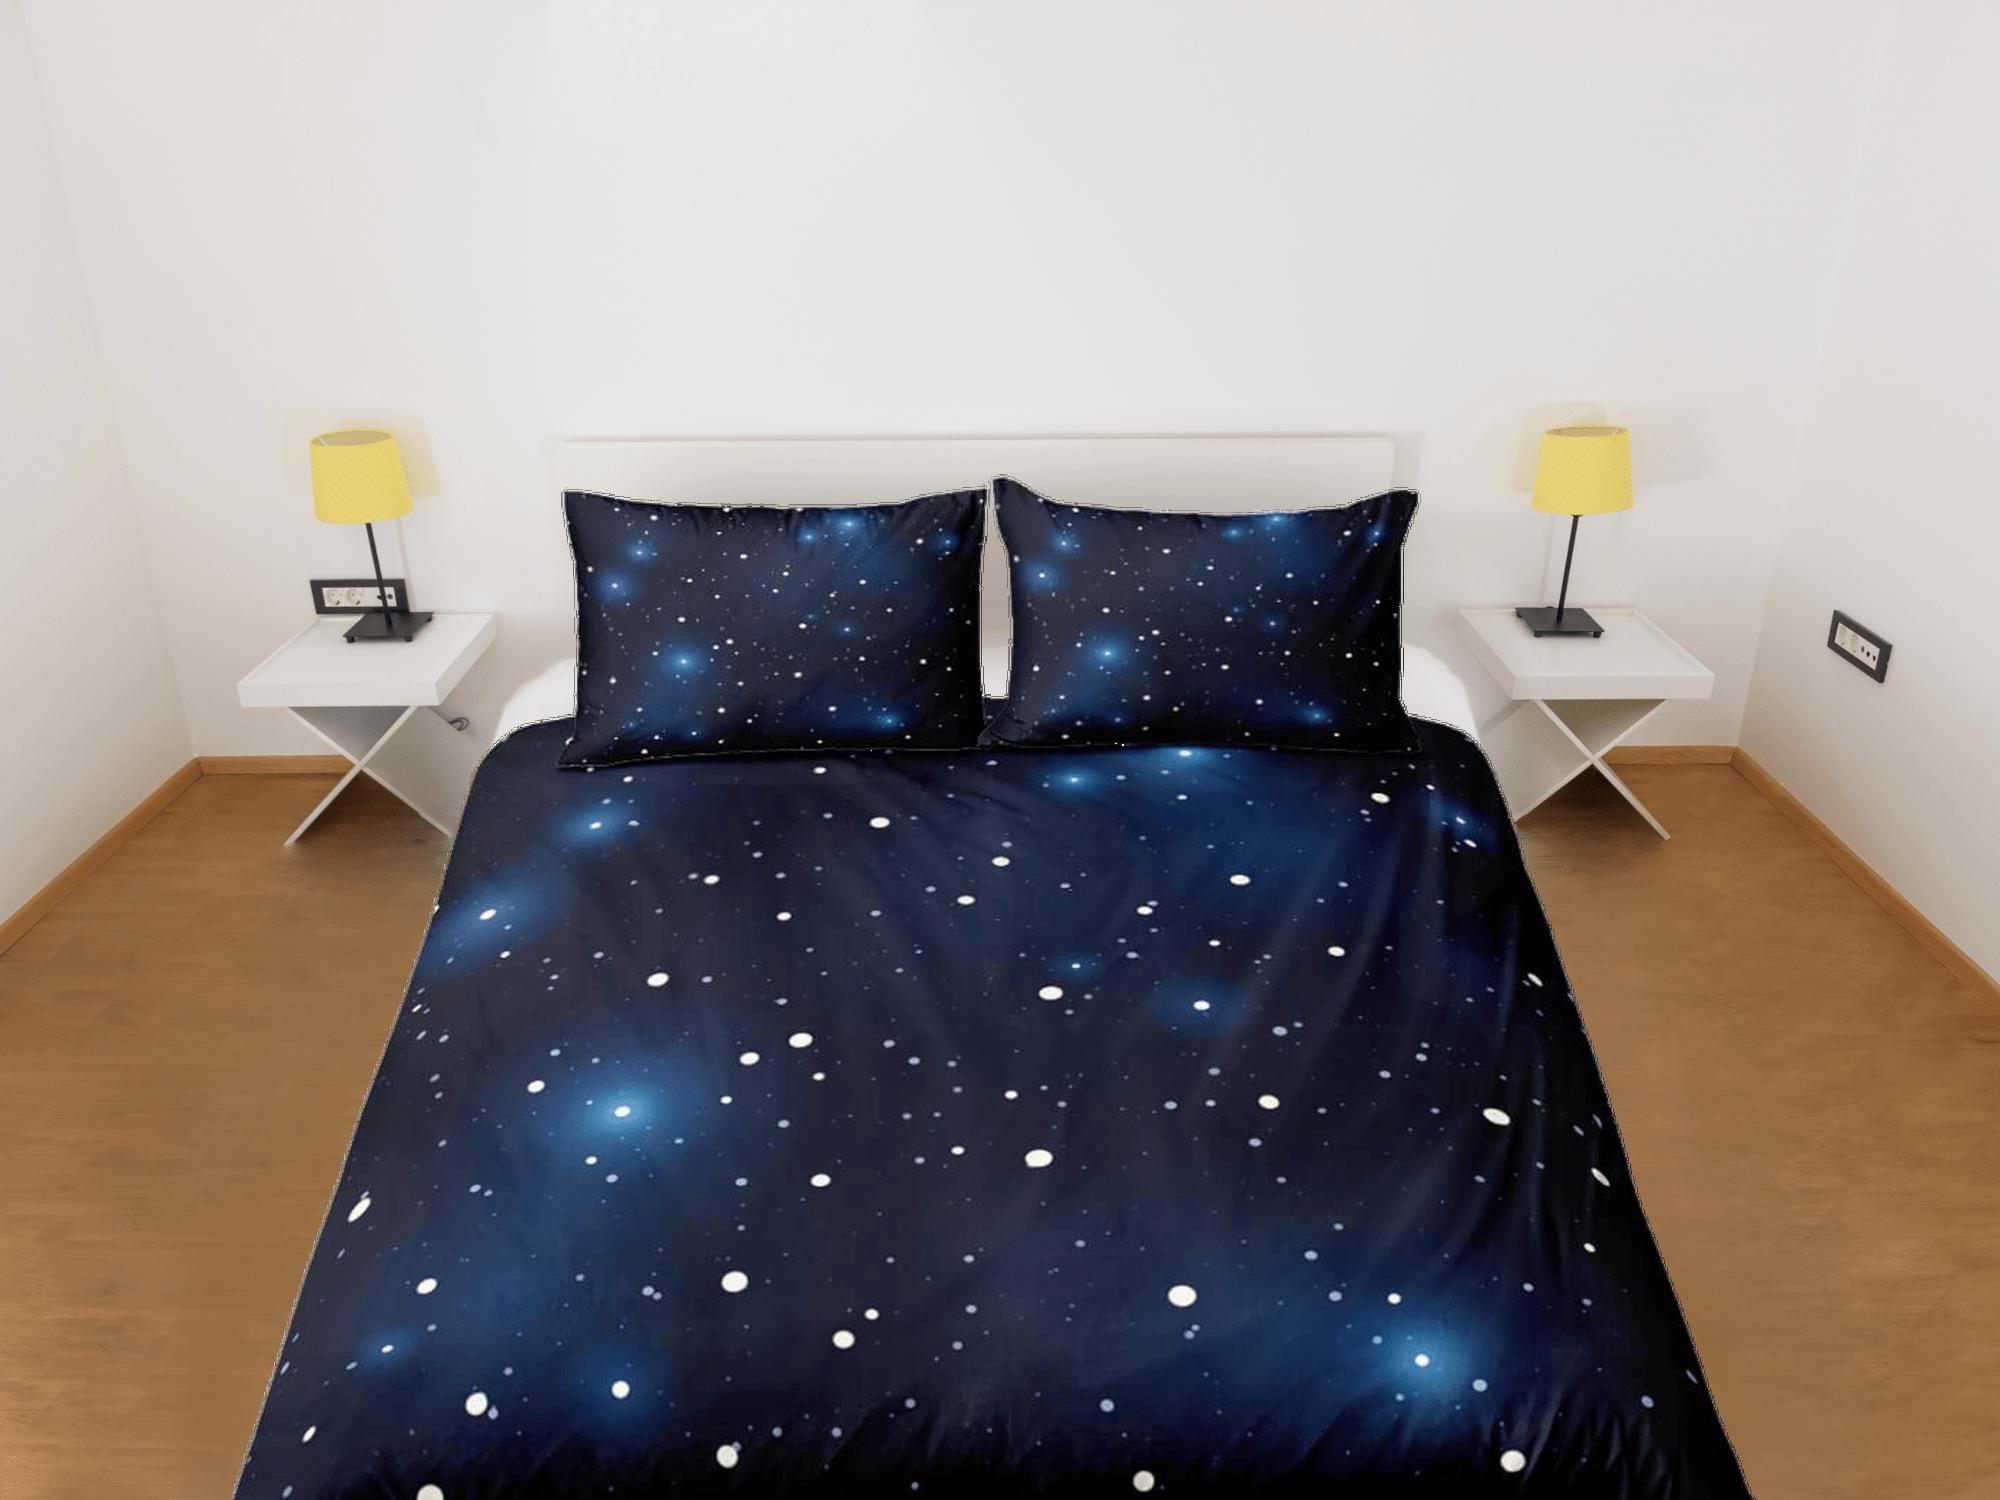 daintyduvet White dwarf stars galaxy bedding, 3D outer space bedding set full, cosmic duvet cover king, queen, dorm bedding, toddler bedding aesthetic